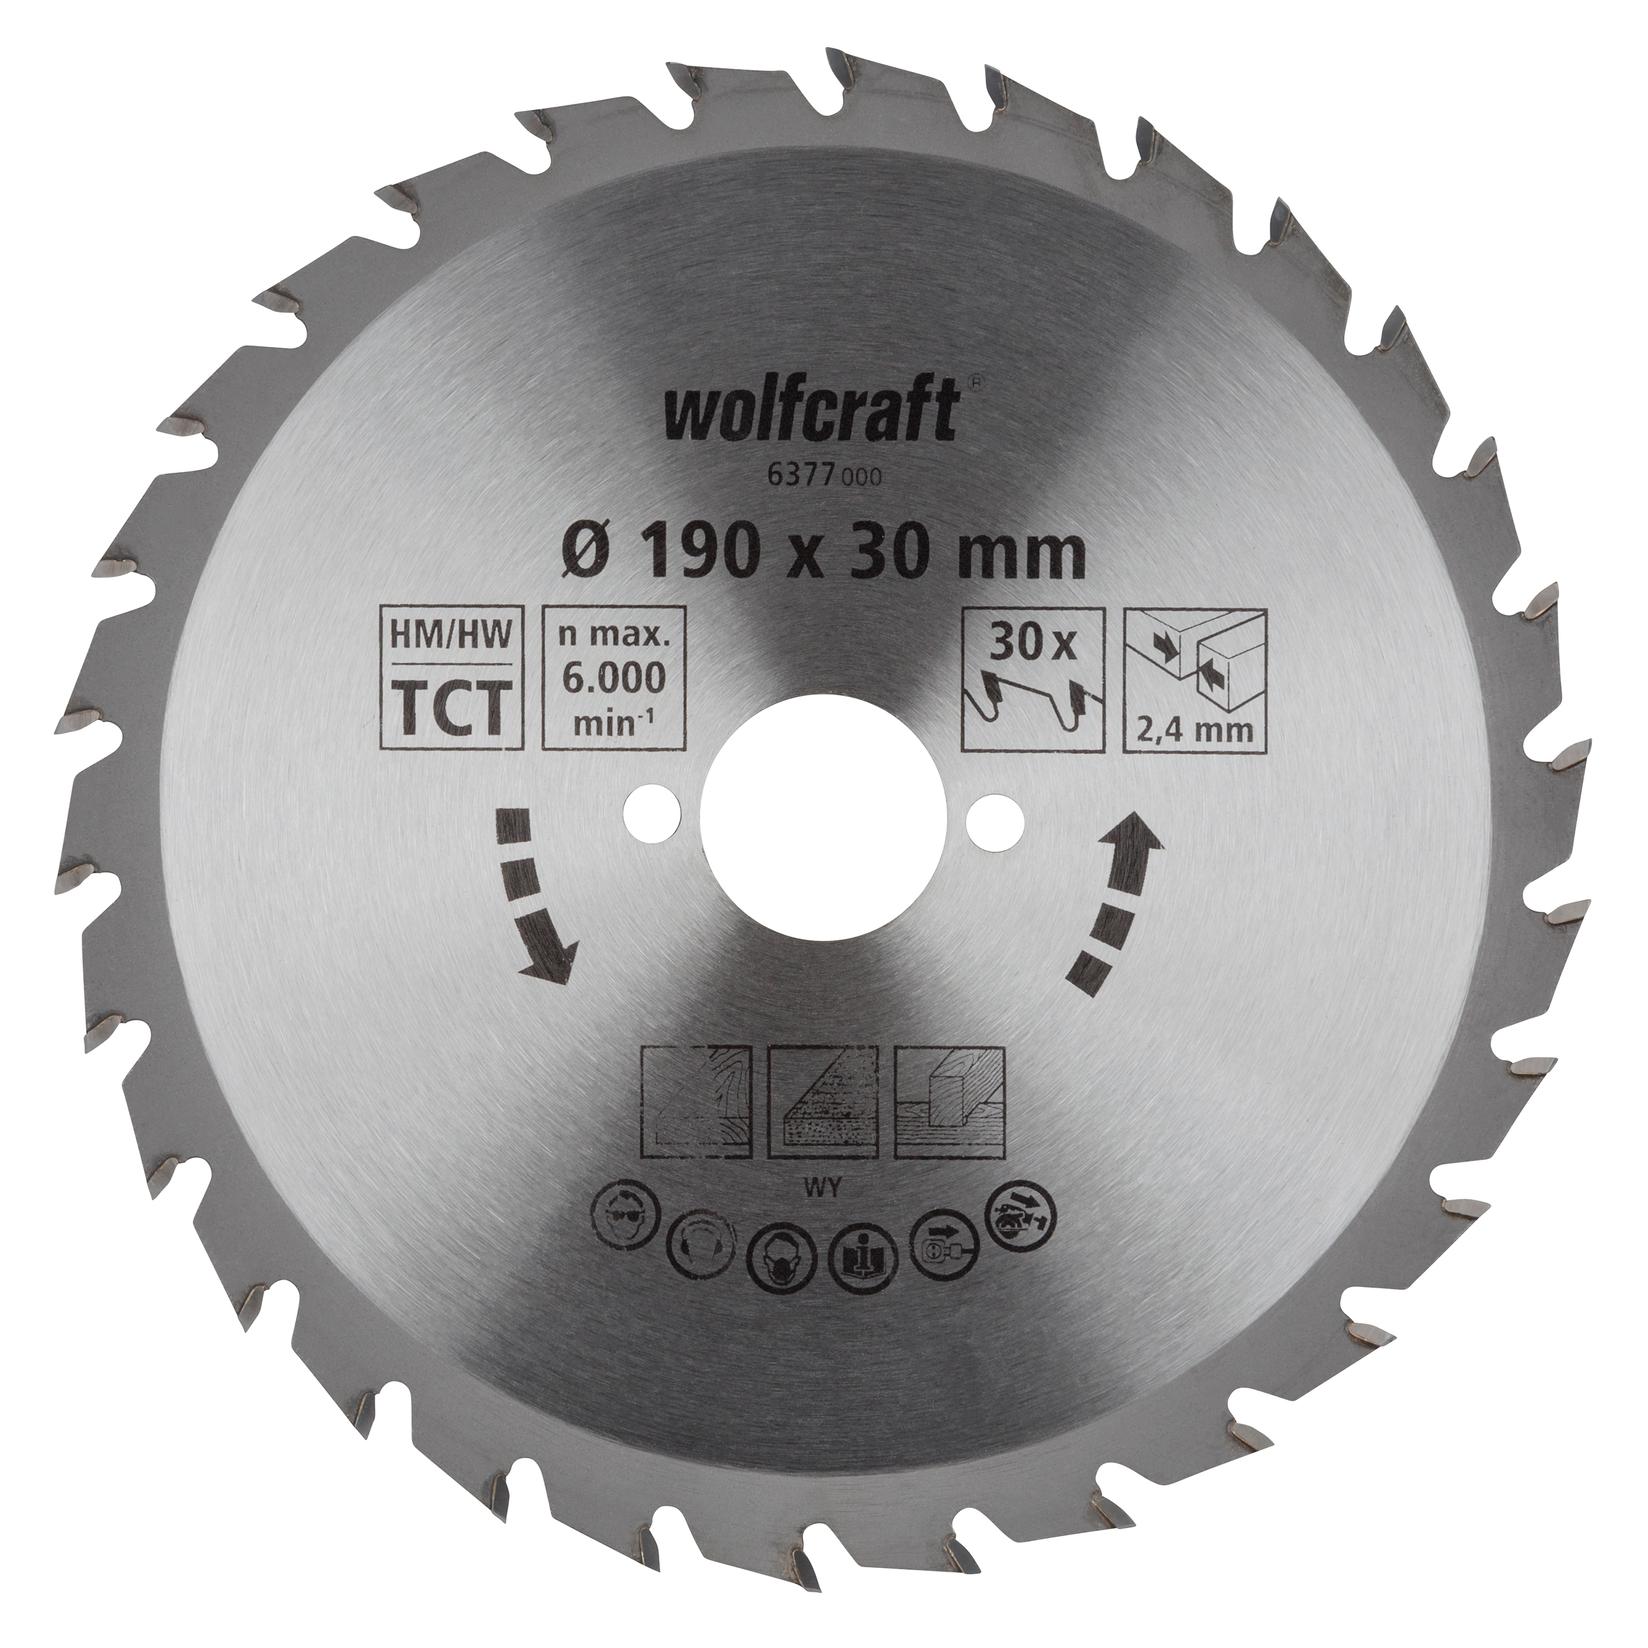 WOLFCRAFT Kružna testera za ručne cirkulare, HM, 190mm 6377000